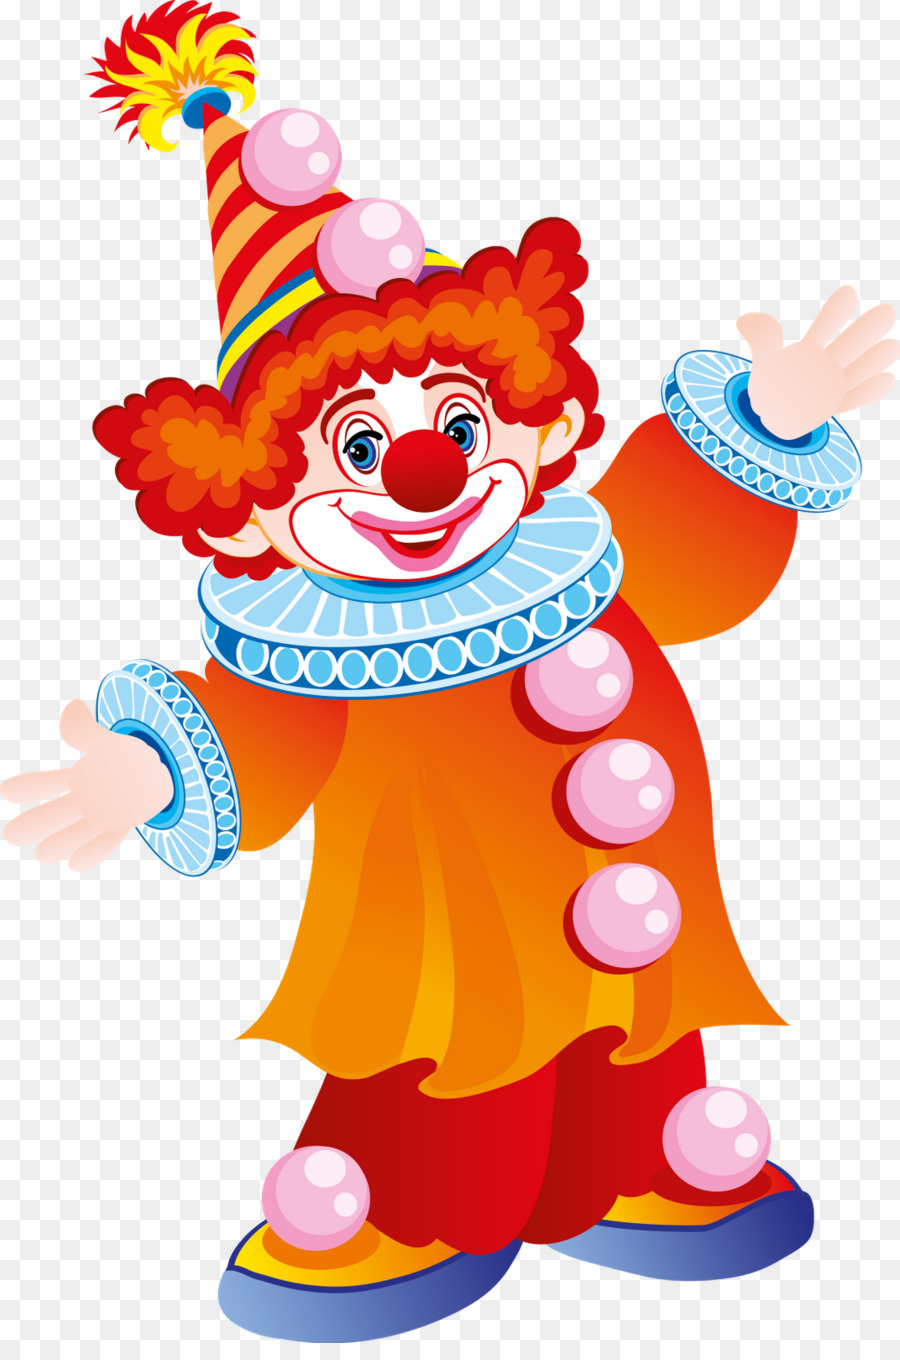 Joker Clown Clip art - Circus png download - 1072*1600 ...